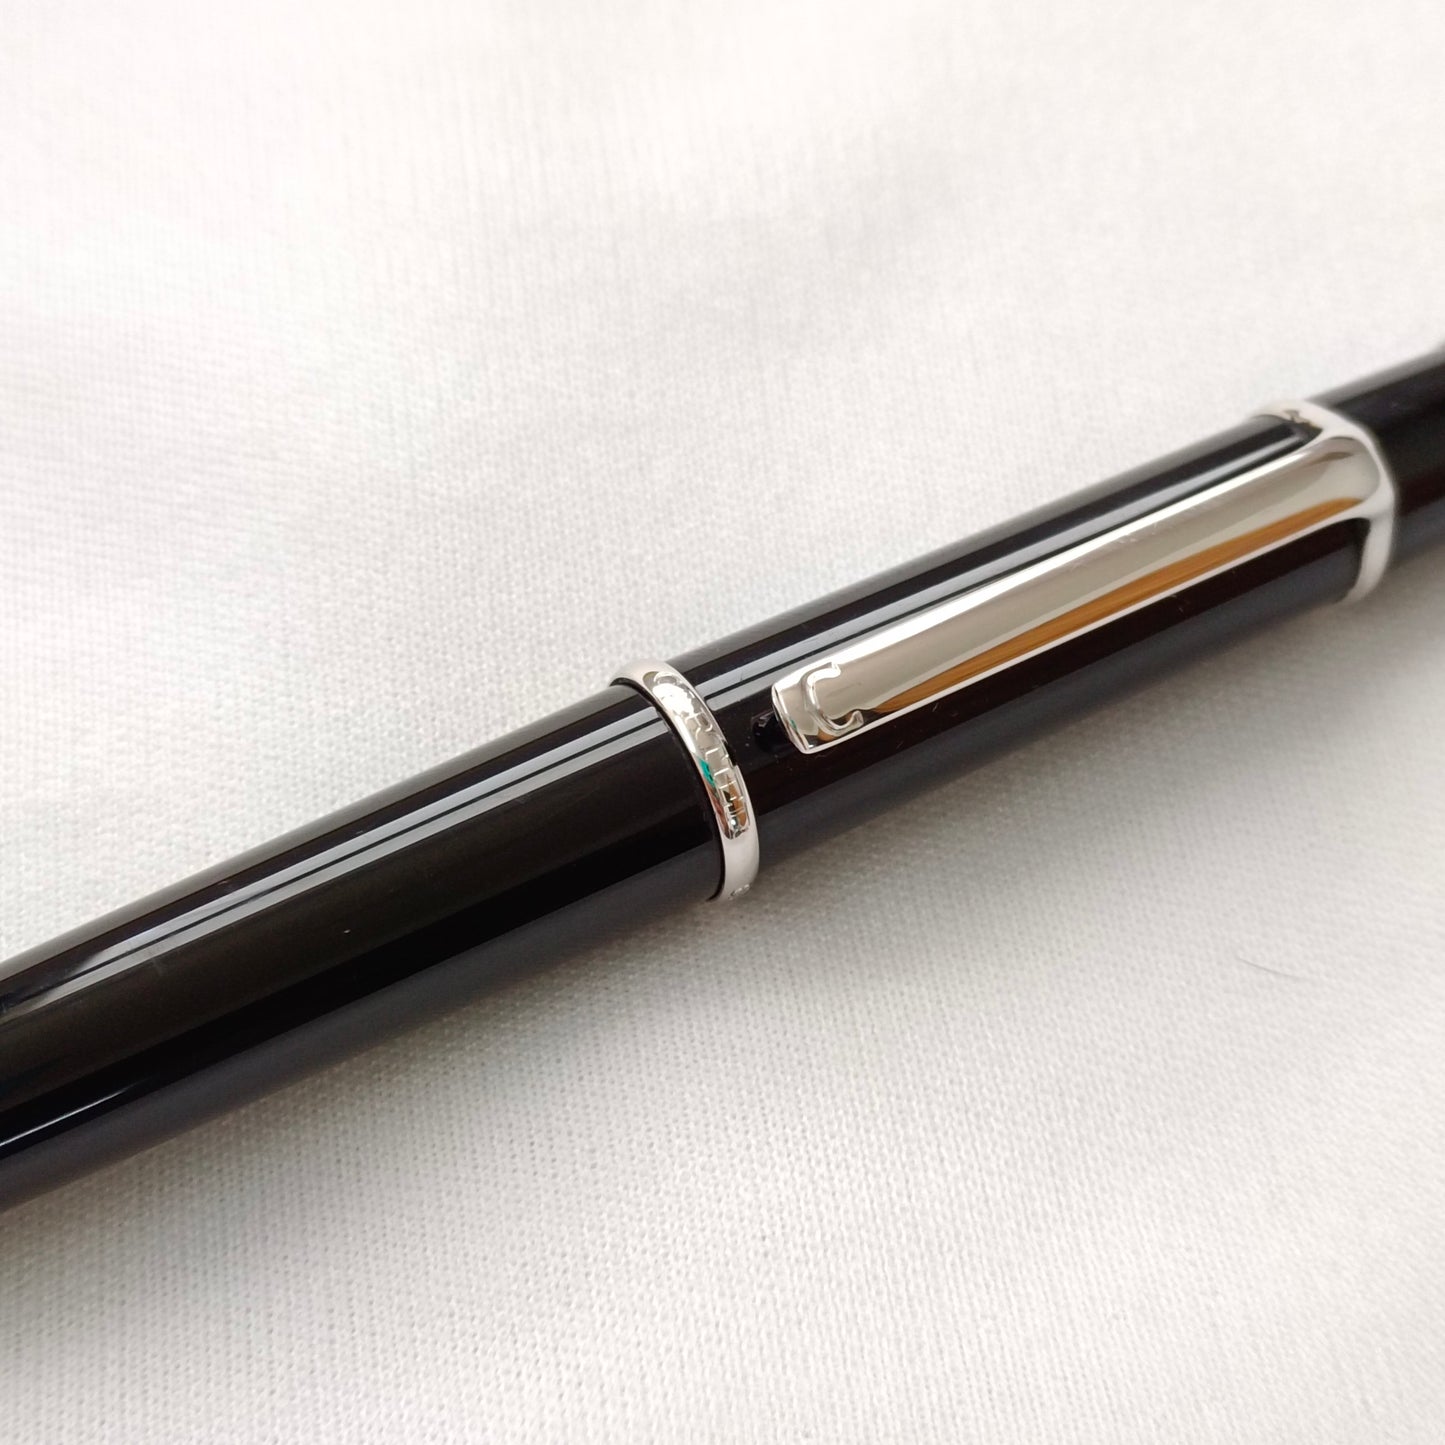 Cartier diabolo black platinum trim Ball pen